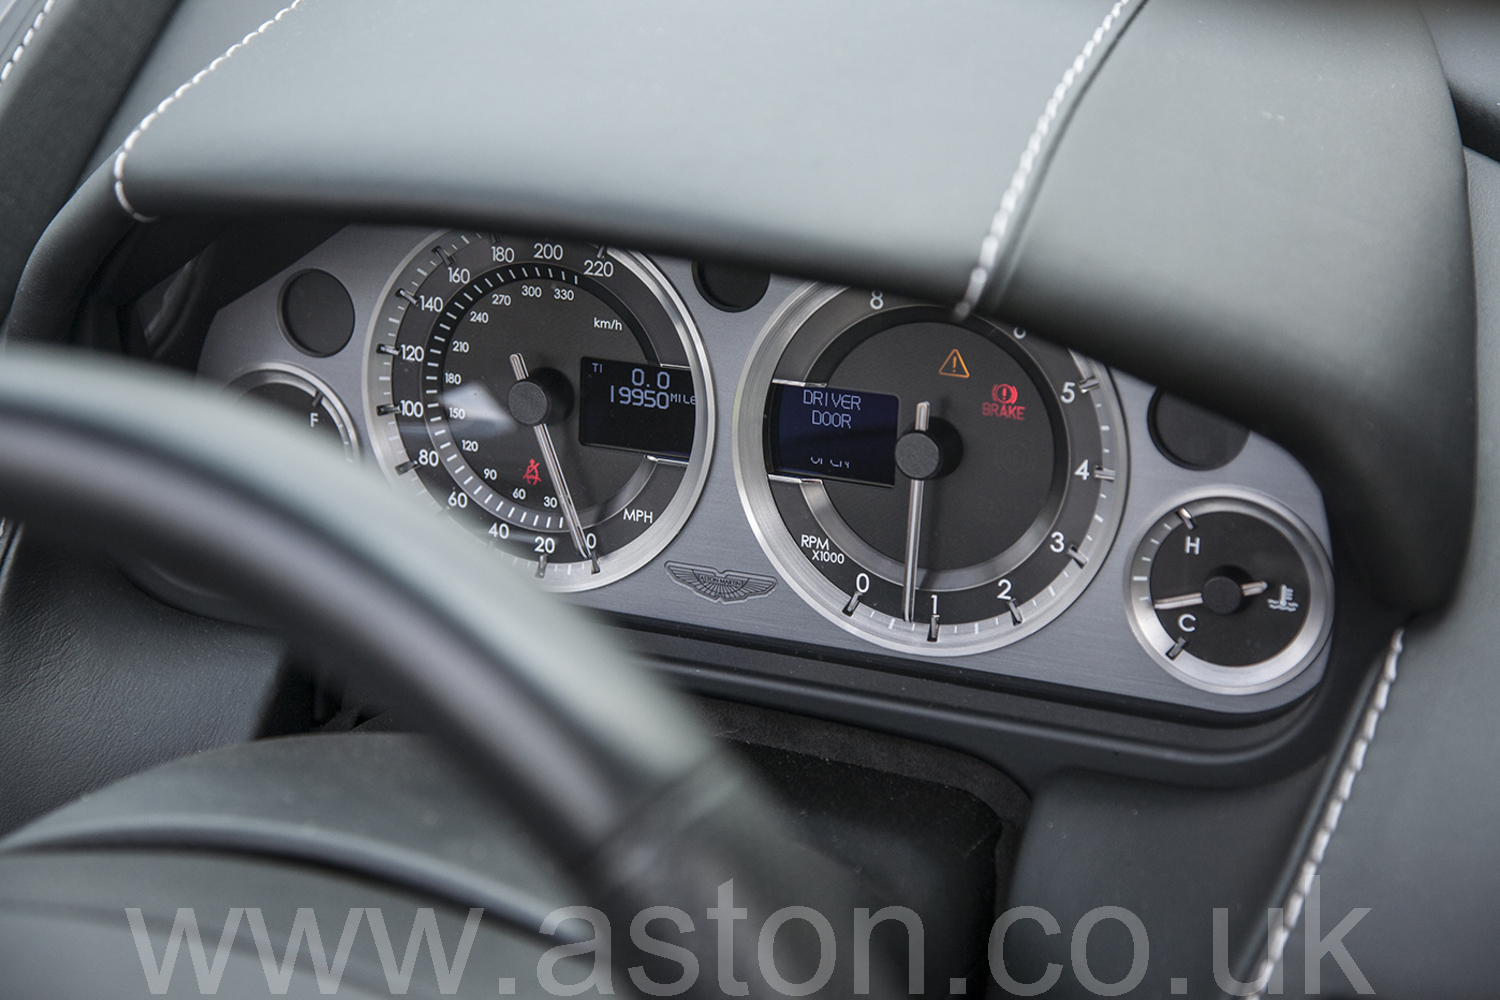 2008 Aston Martin AMV8 Vantage Roadster for sale - Aston Workshop AW171016b